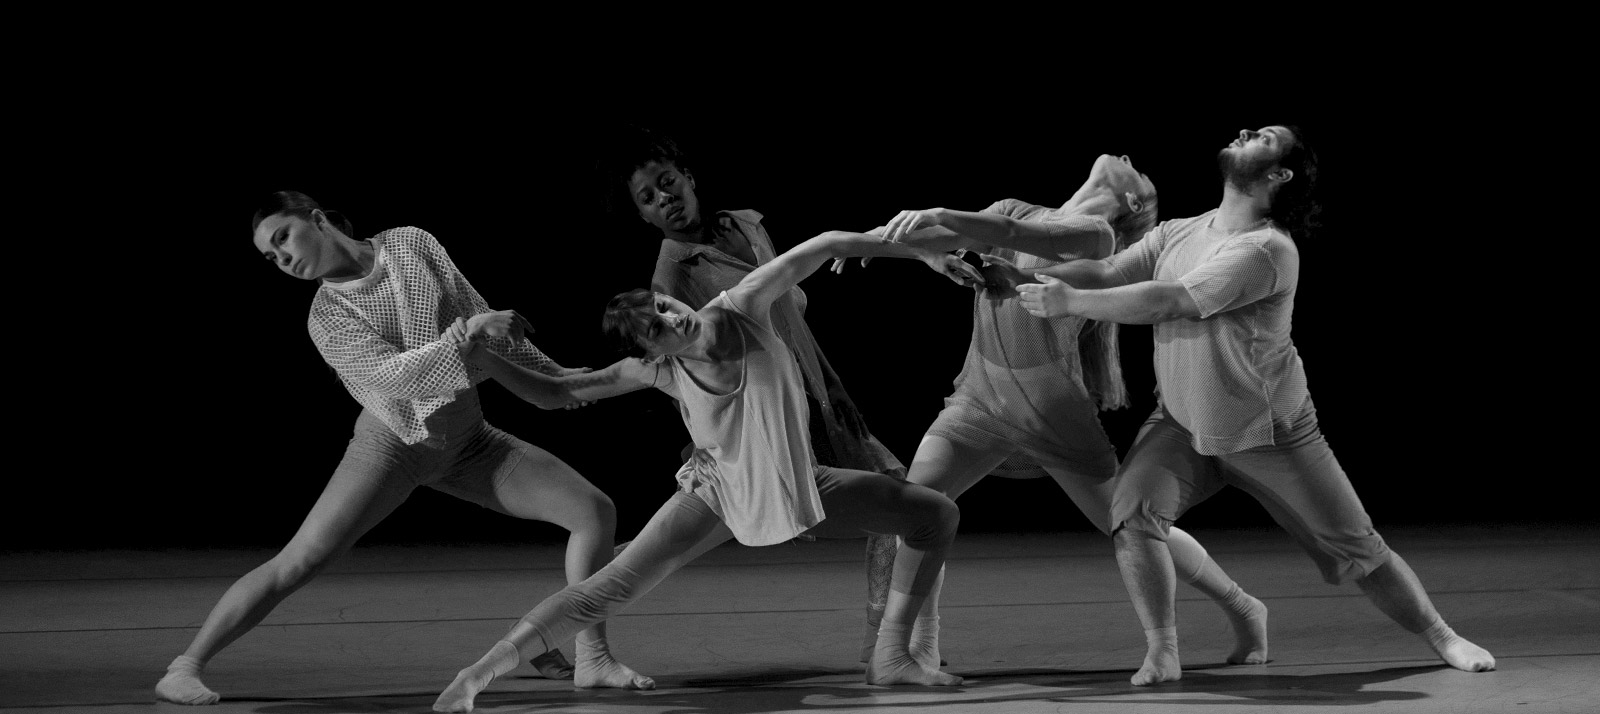 Five dances students moving rhythmically together.